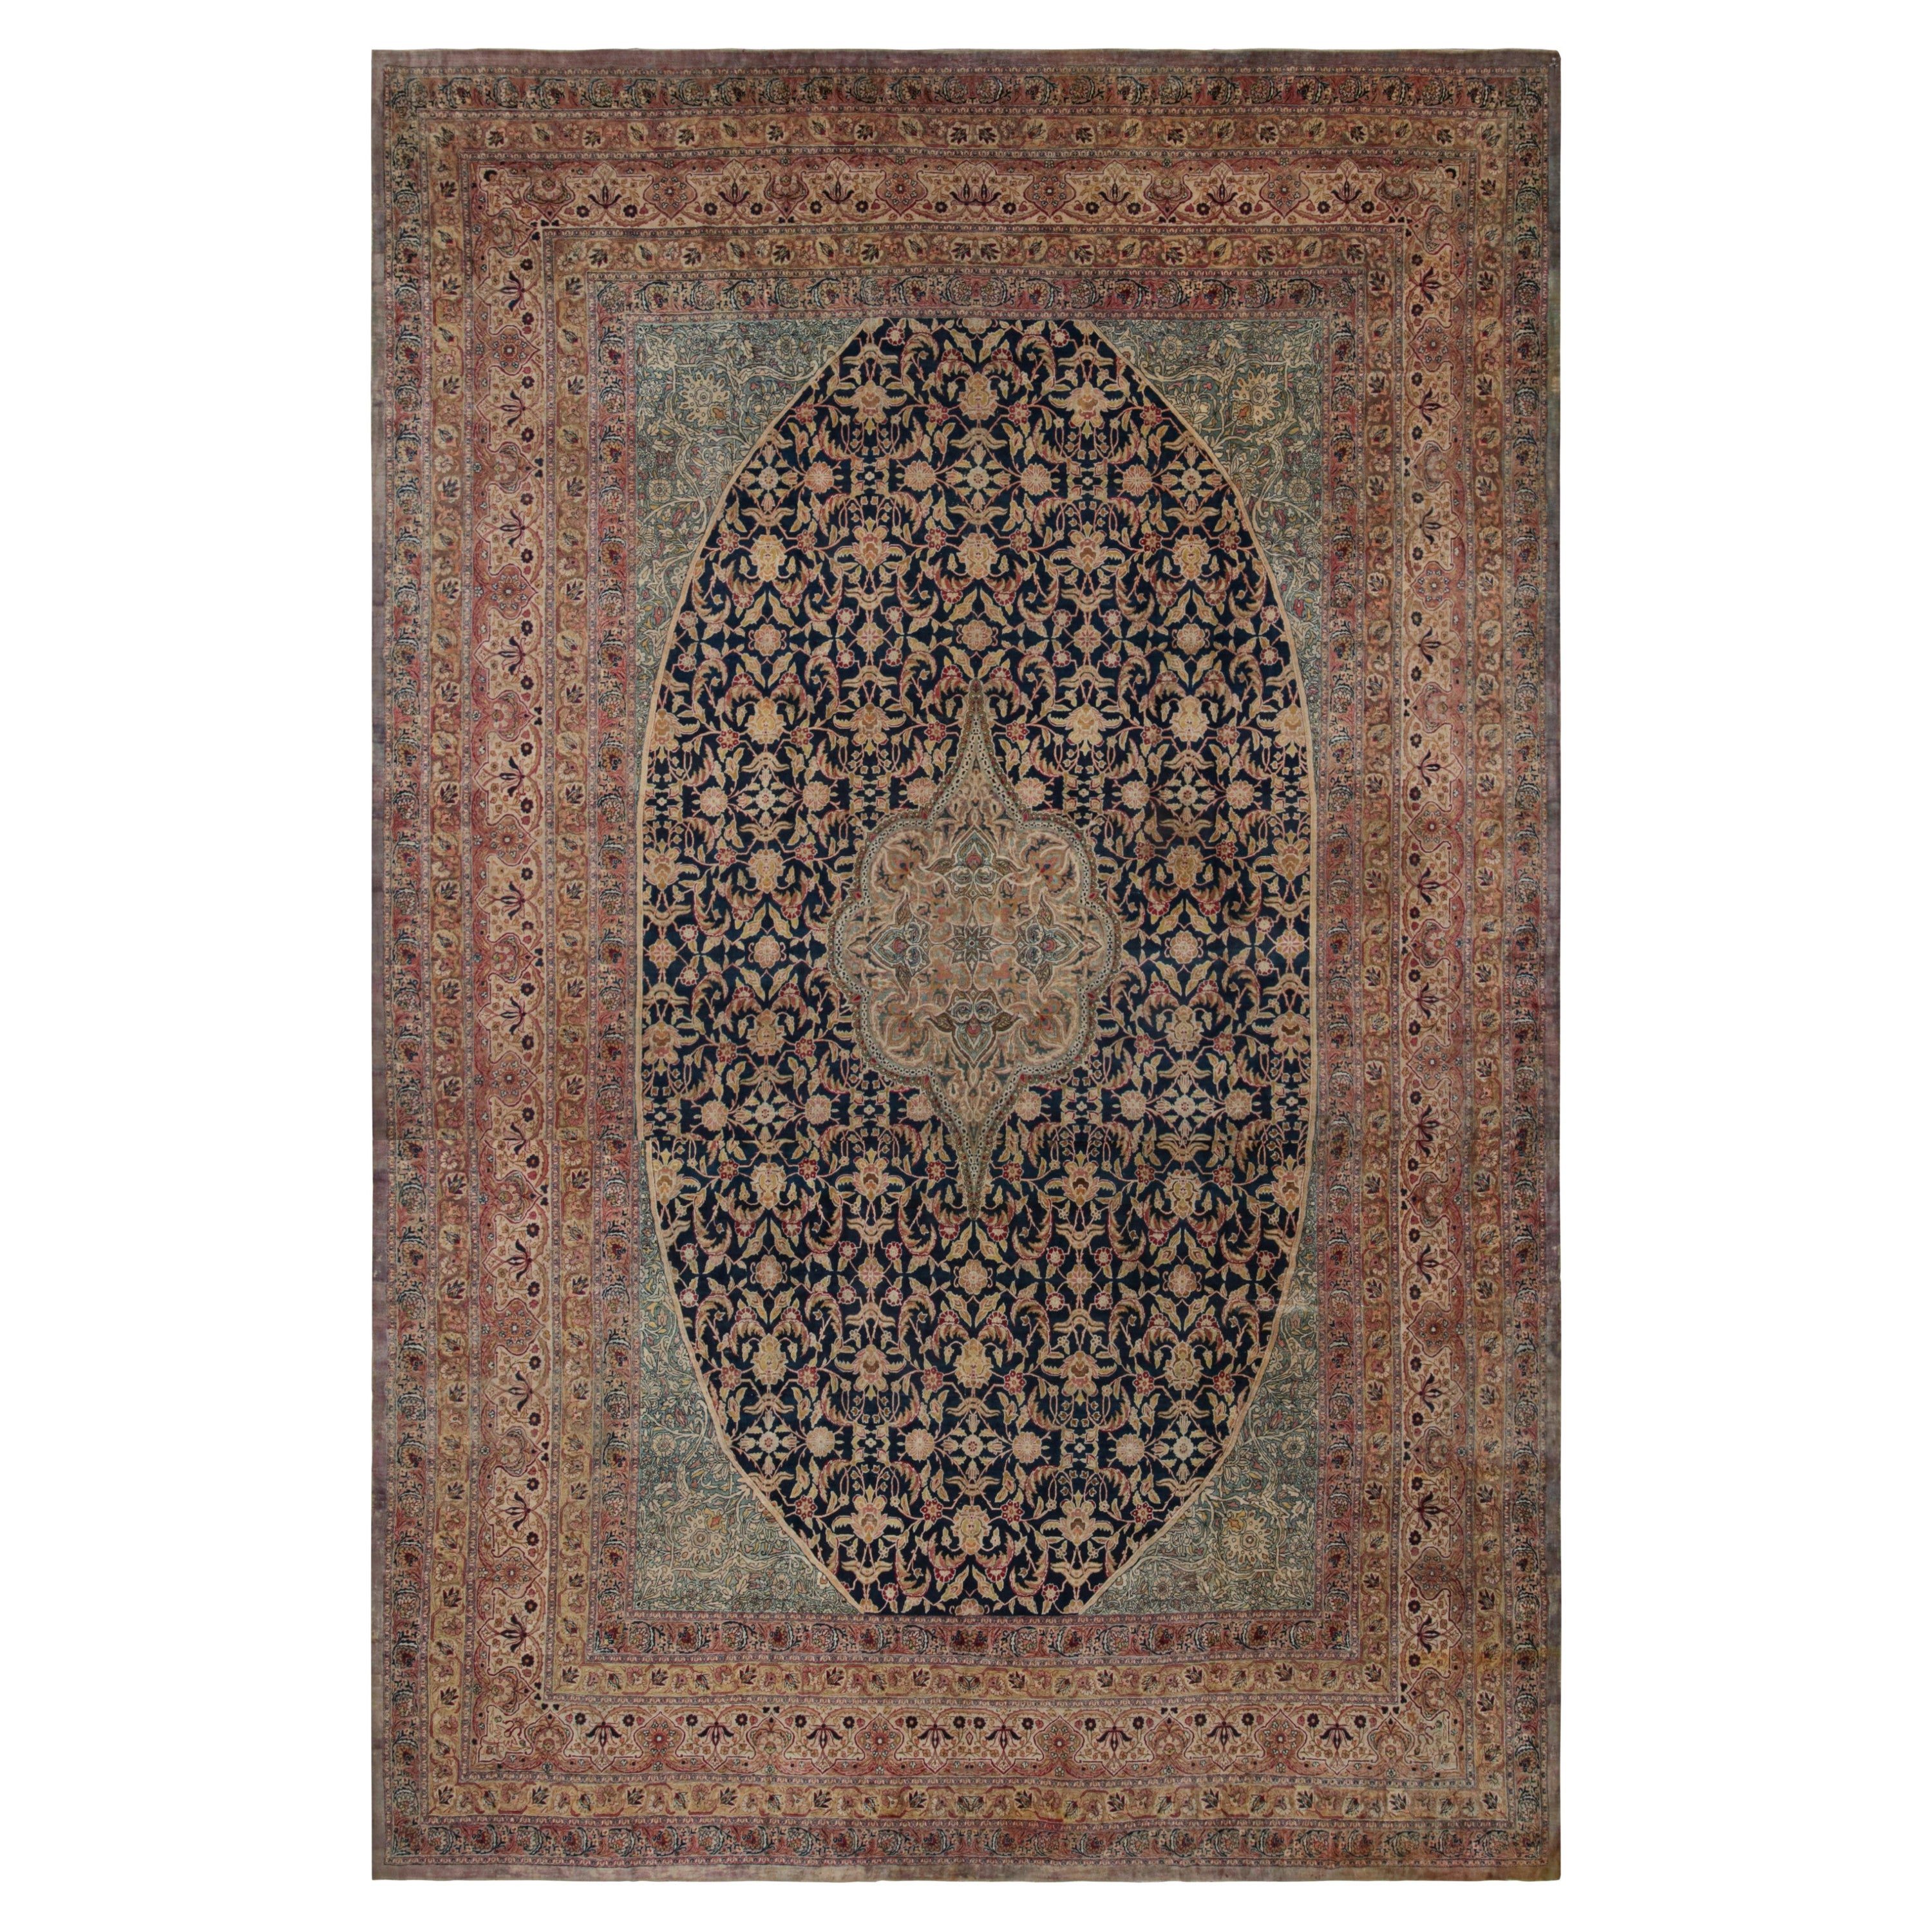 Antique Persian Kerman Lavar rug, with Floral Patterns